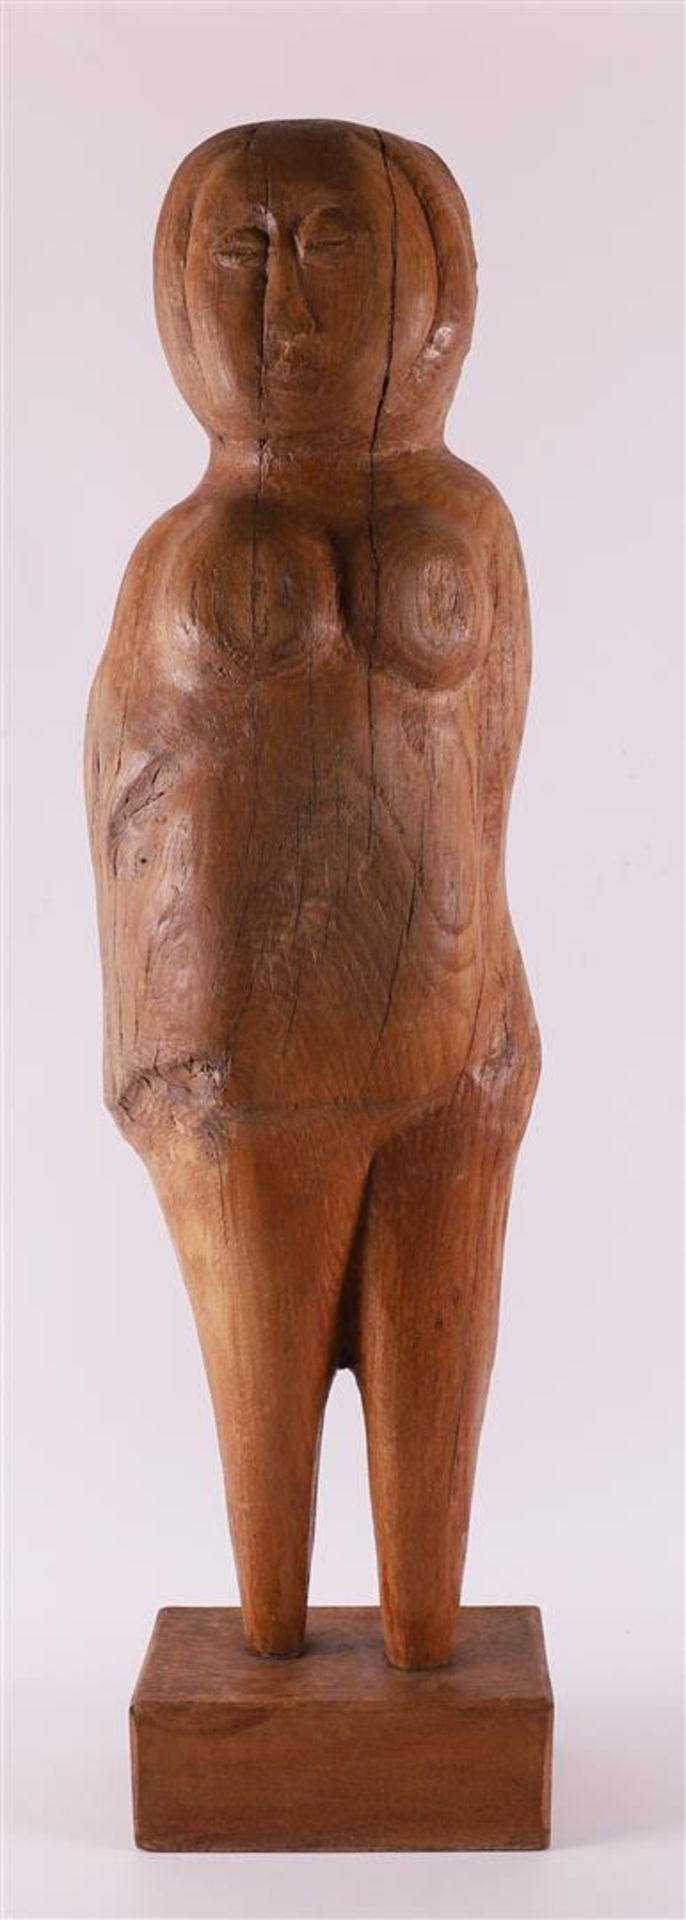 Eggen, Gene (1921-2000) A wooden sculpture of a woman, 2nd half of the 20th cent